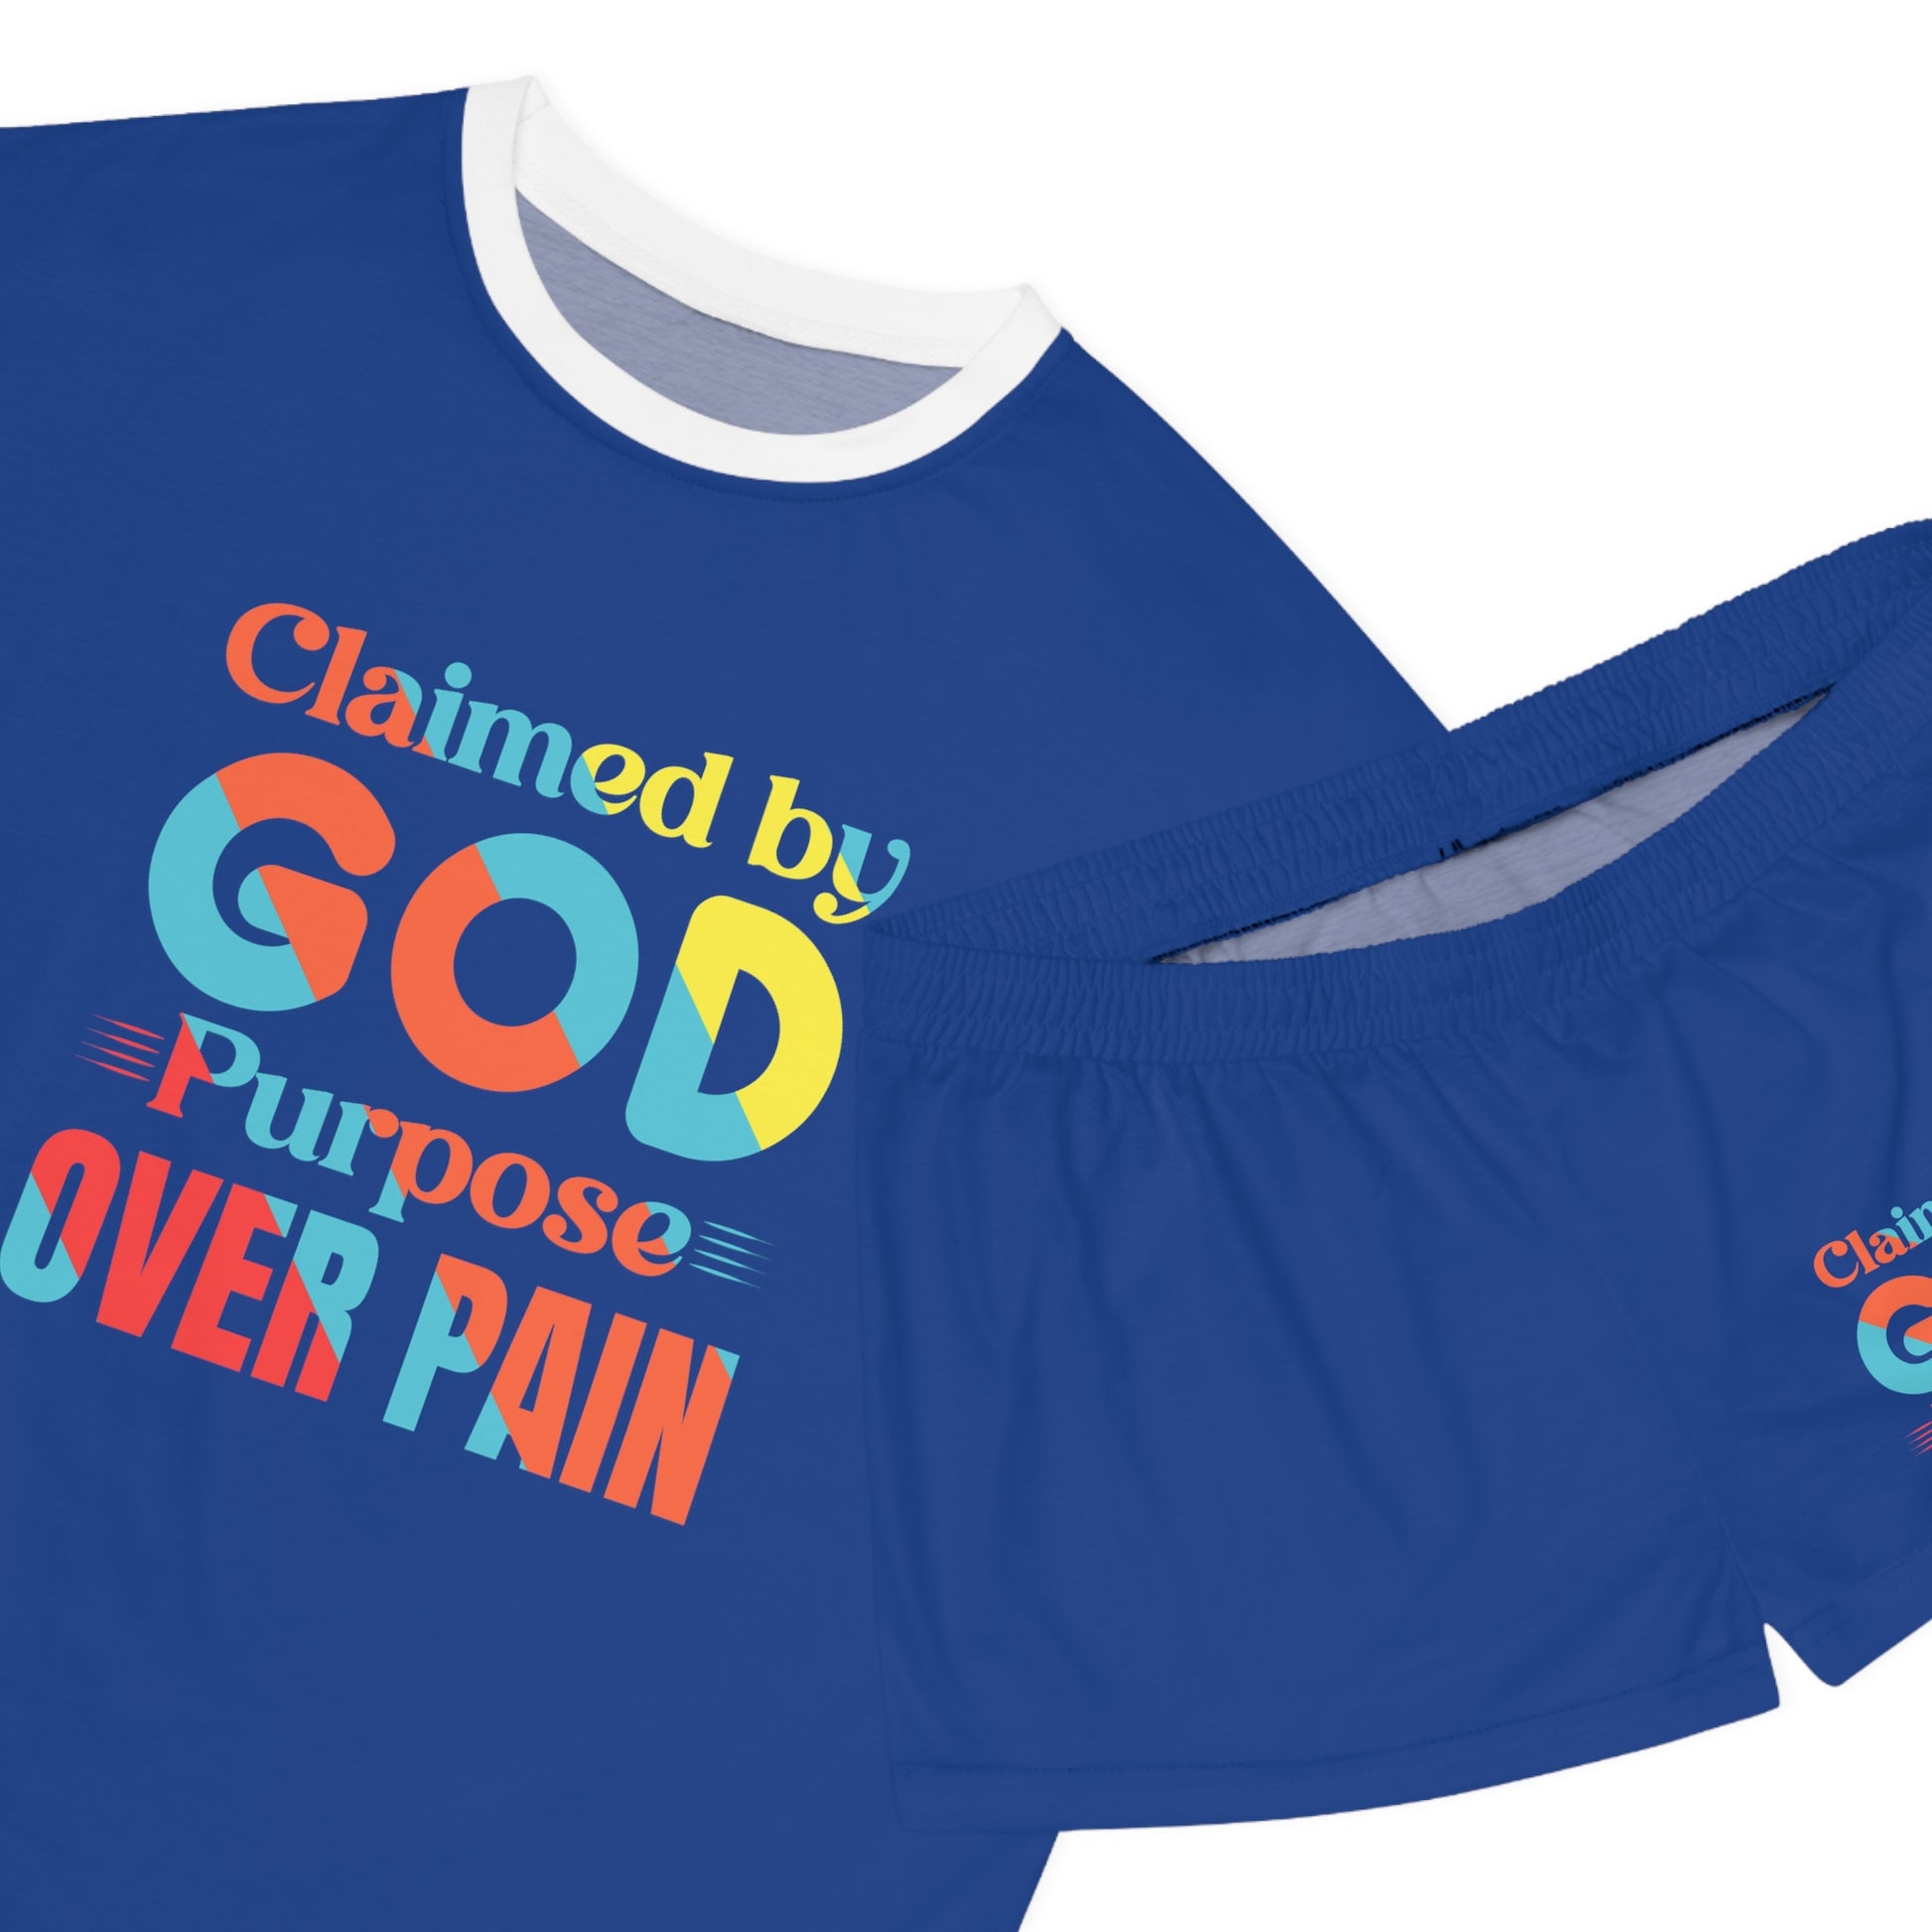 Claimed By God Purpose Over Pain Women's Christian Short Pajama Set Printify